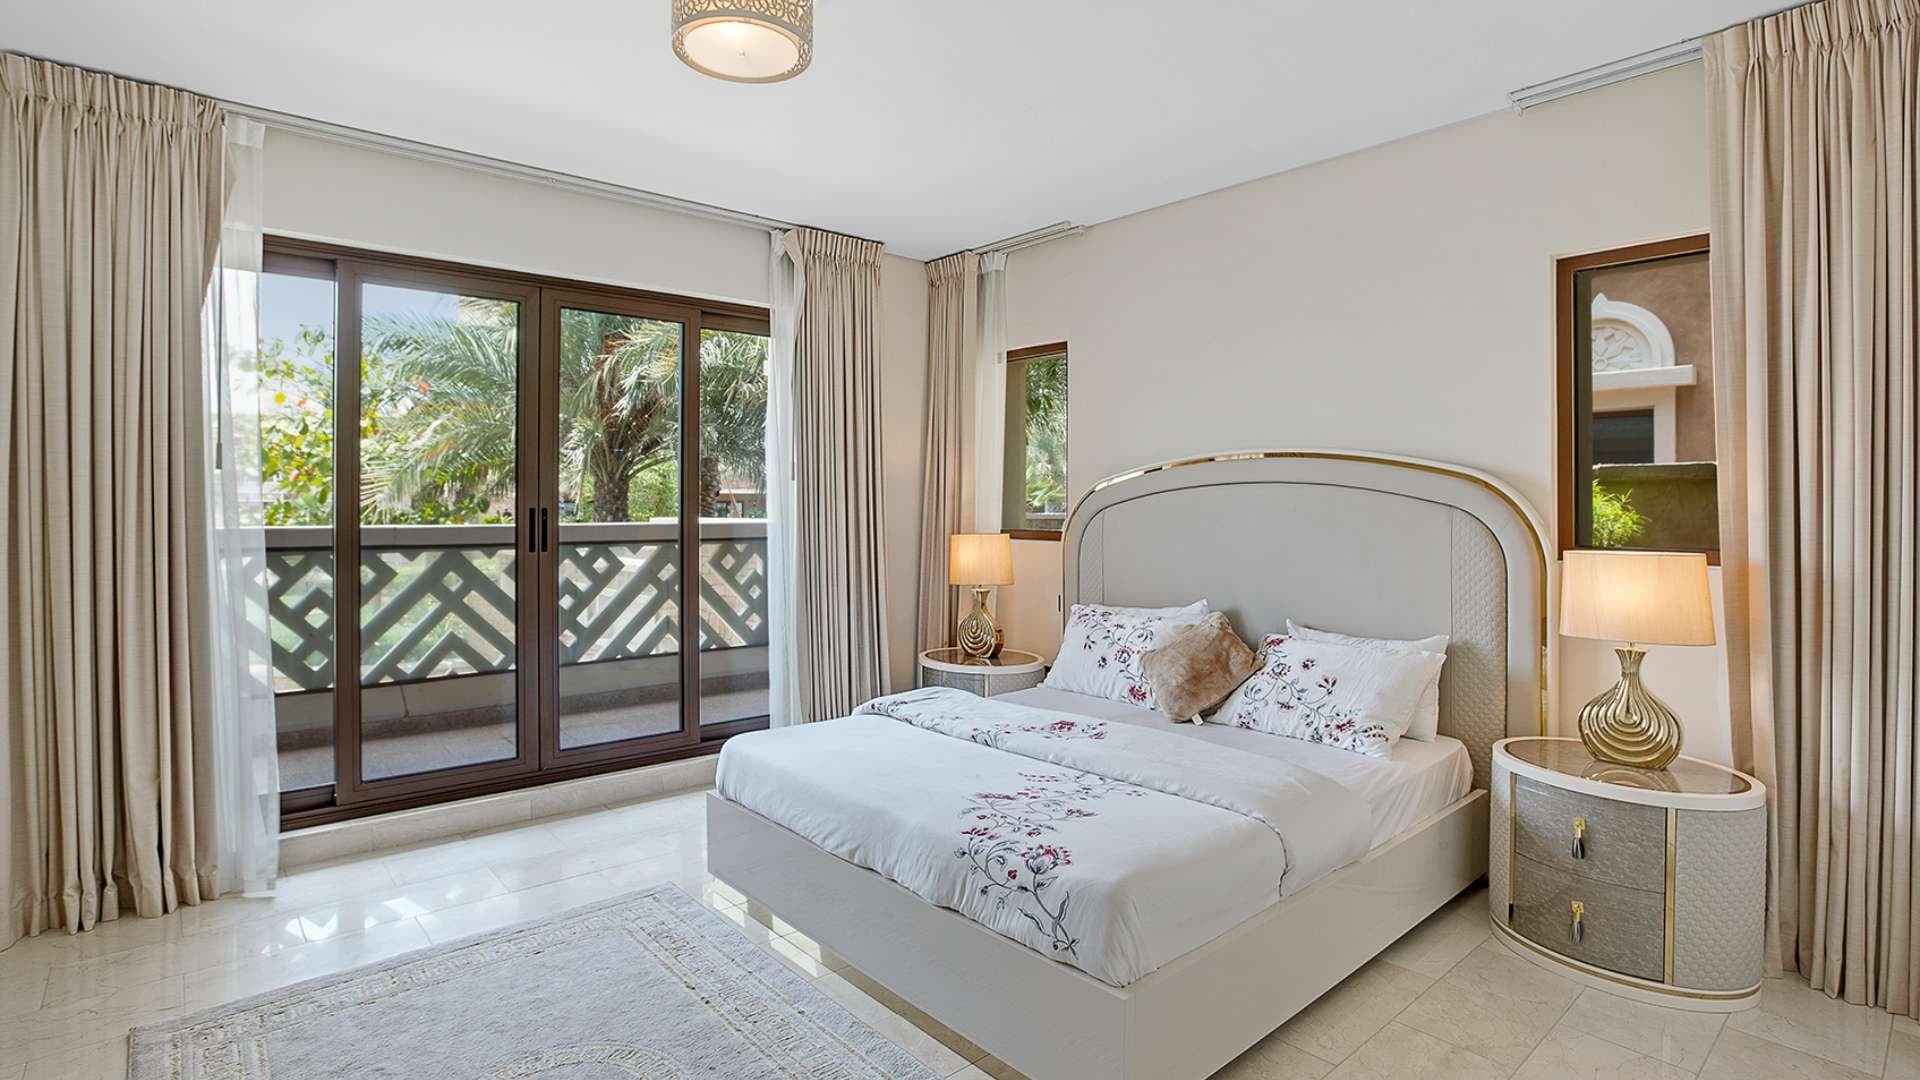 5 Bedroom Villa For Sale Kingdom Of Sheba Lp36453 10f6bfea69e4d700.jpg